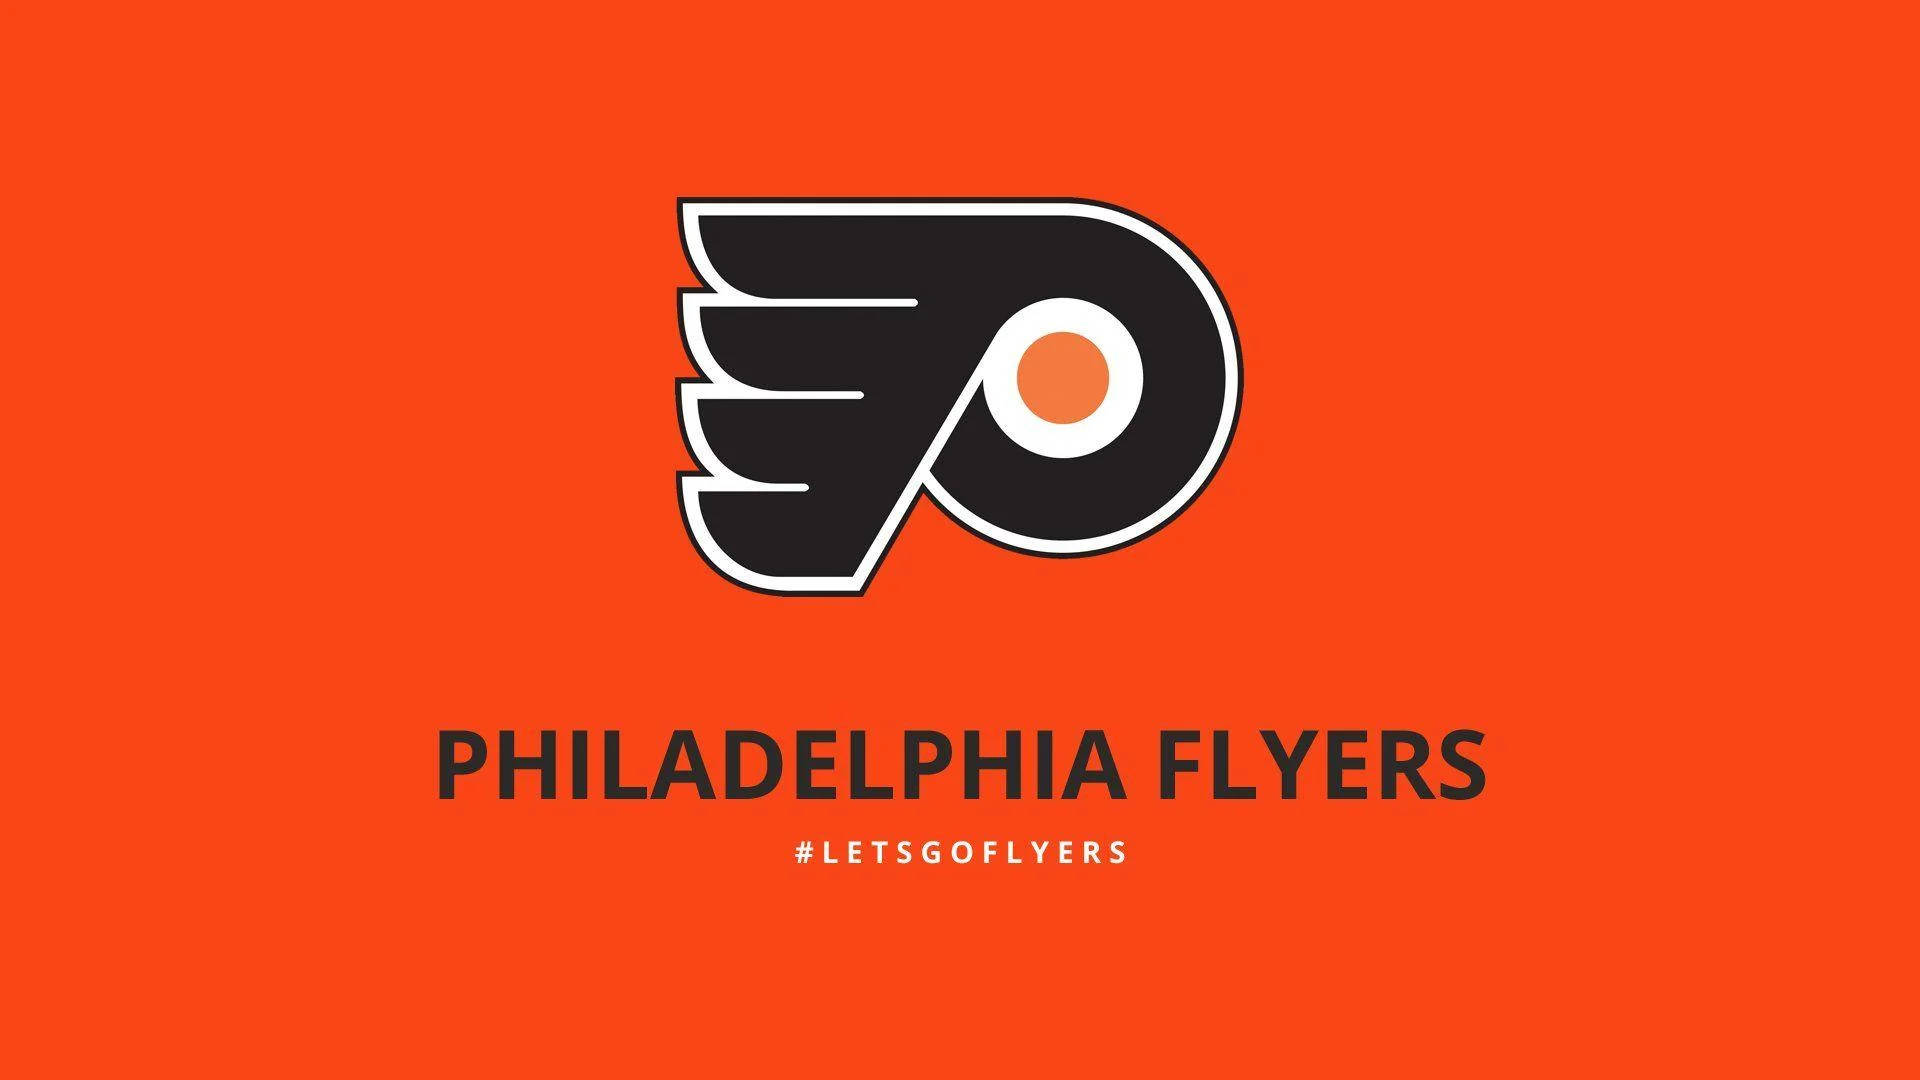 Philadelphia Flyers In Orange Background